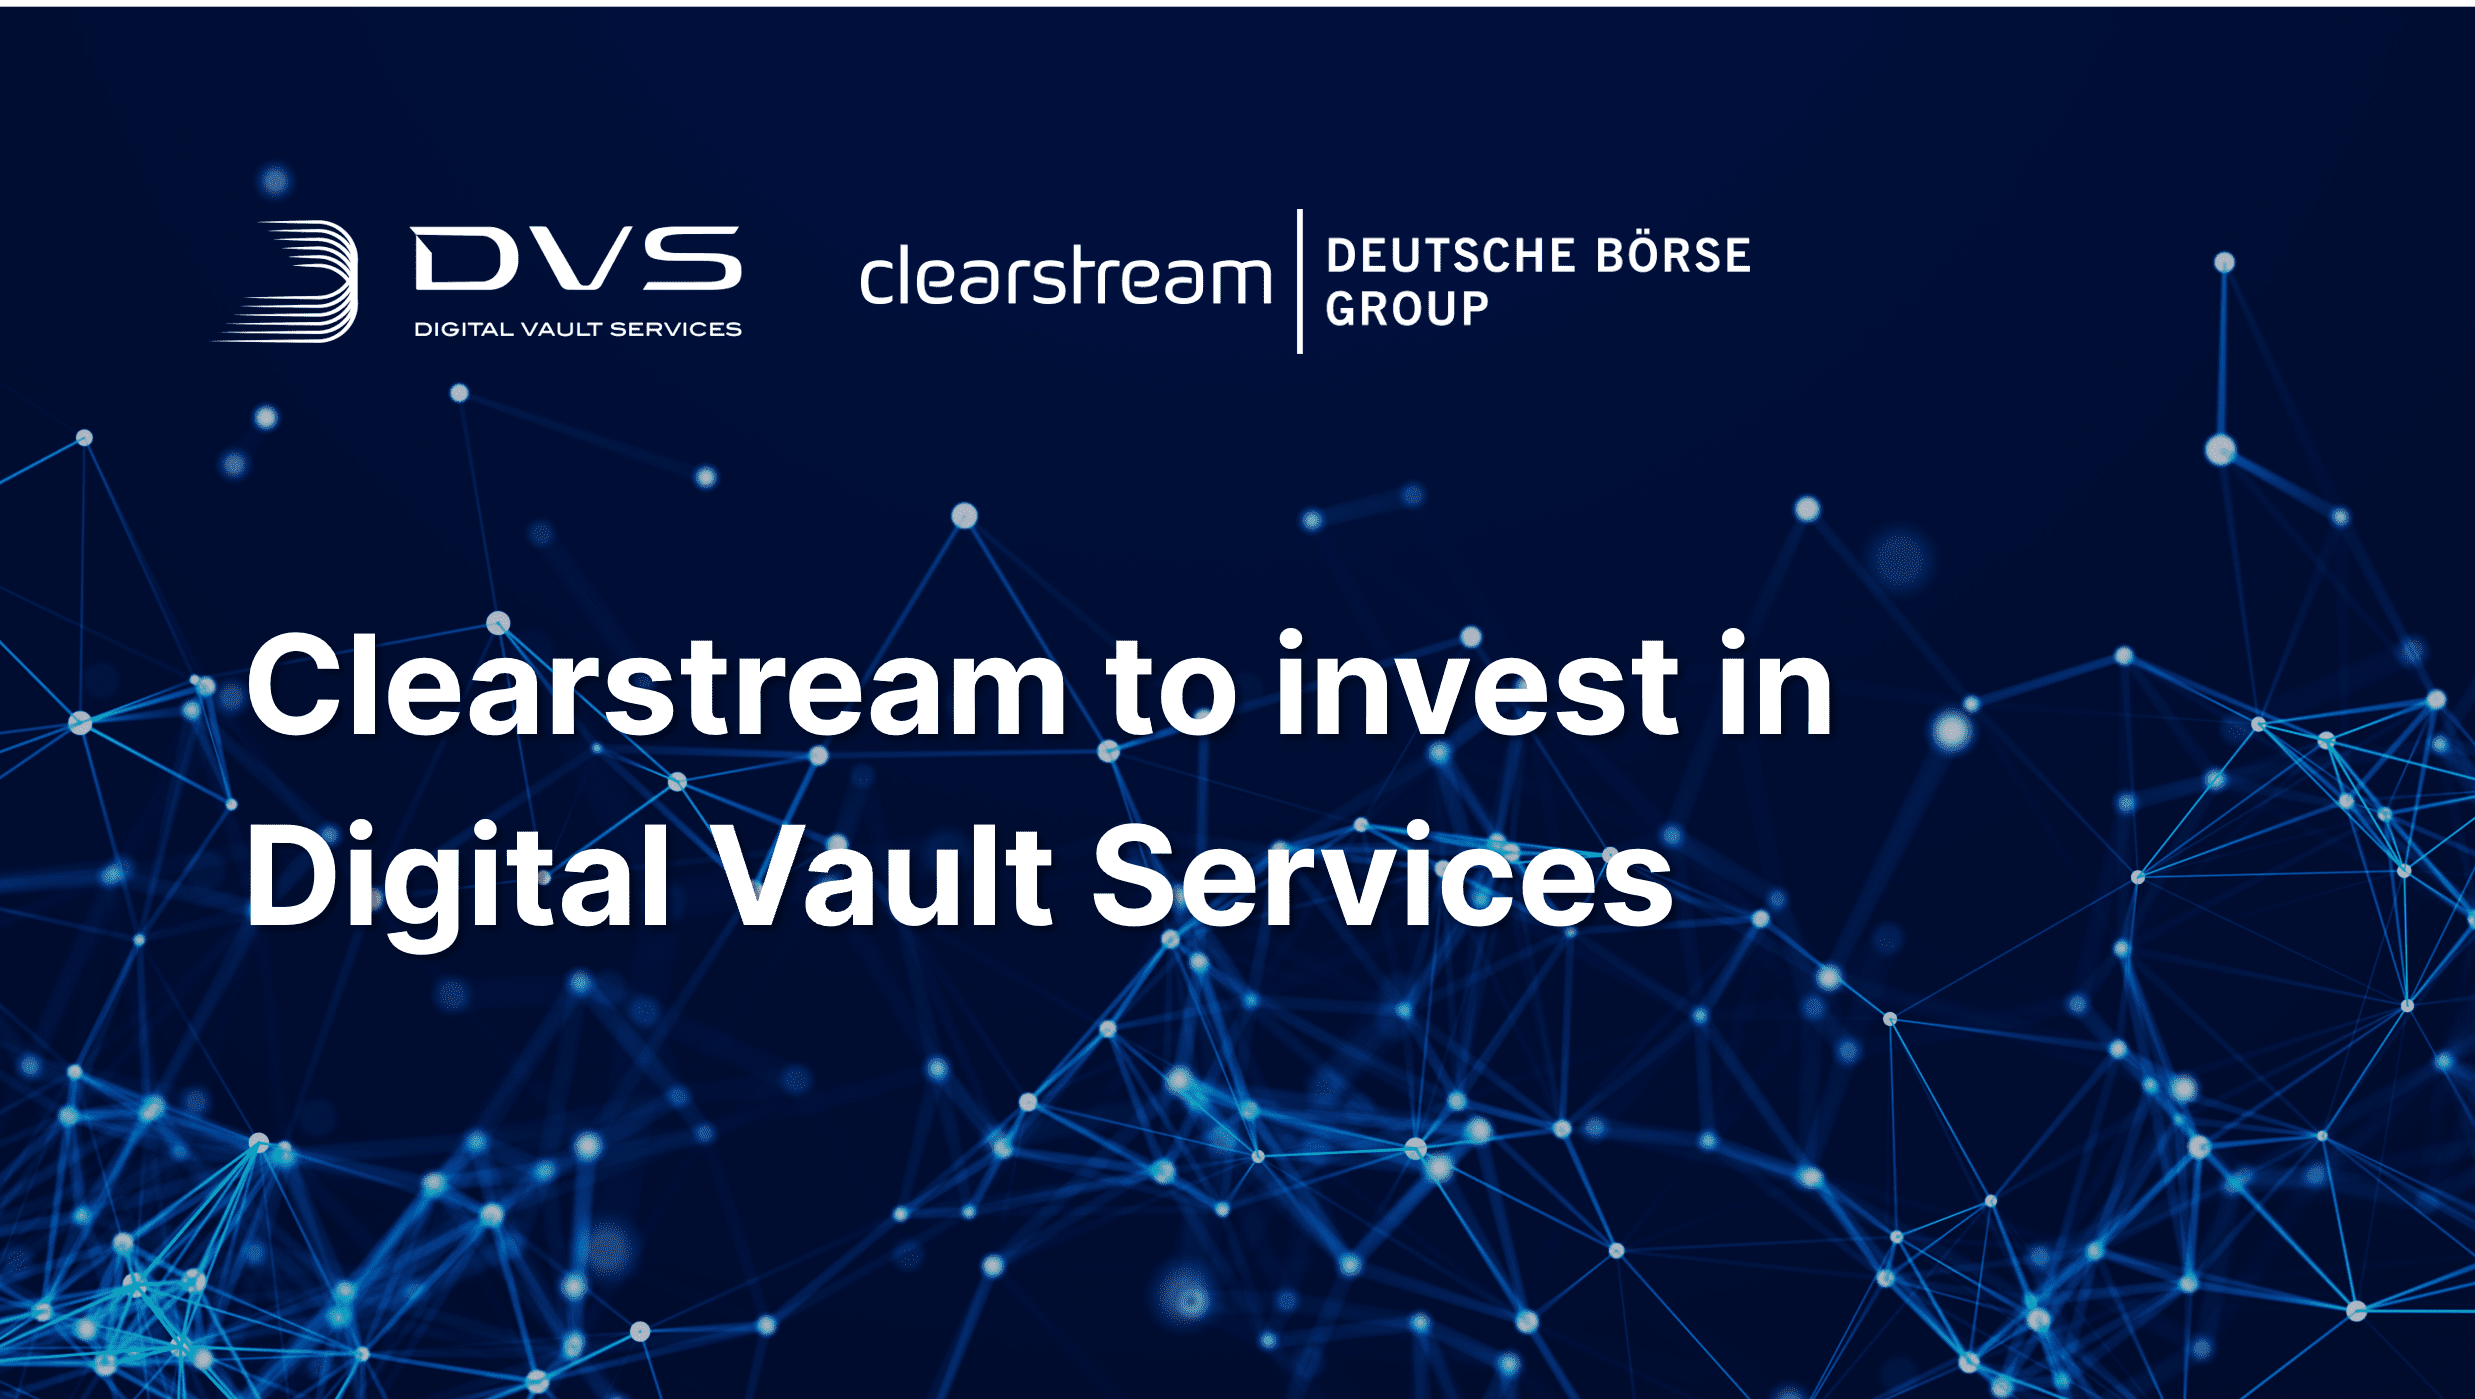 Clearstream investiert in Digital Vault Services